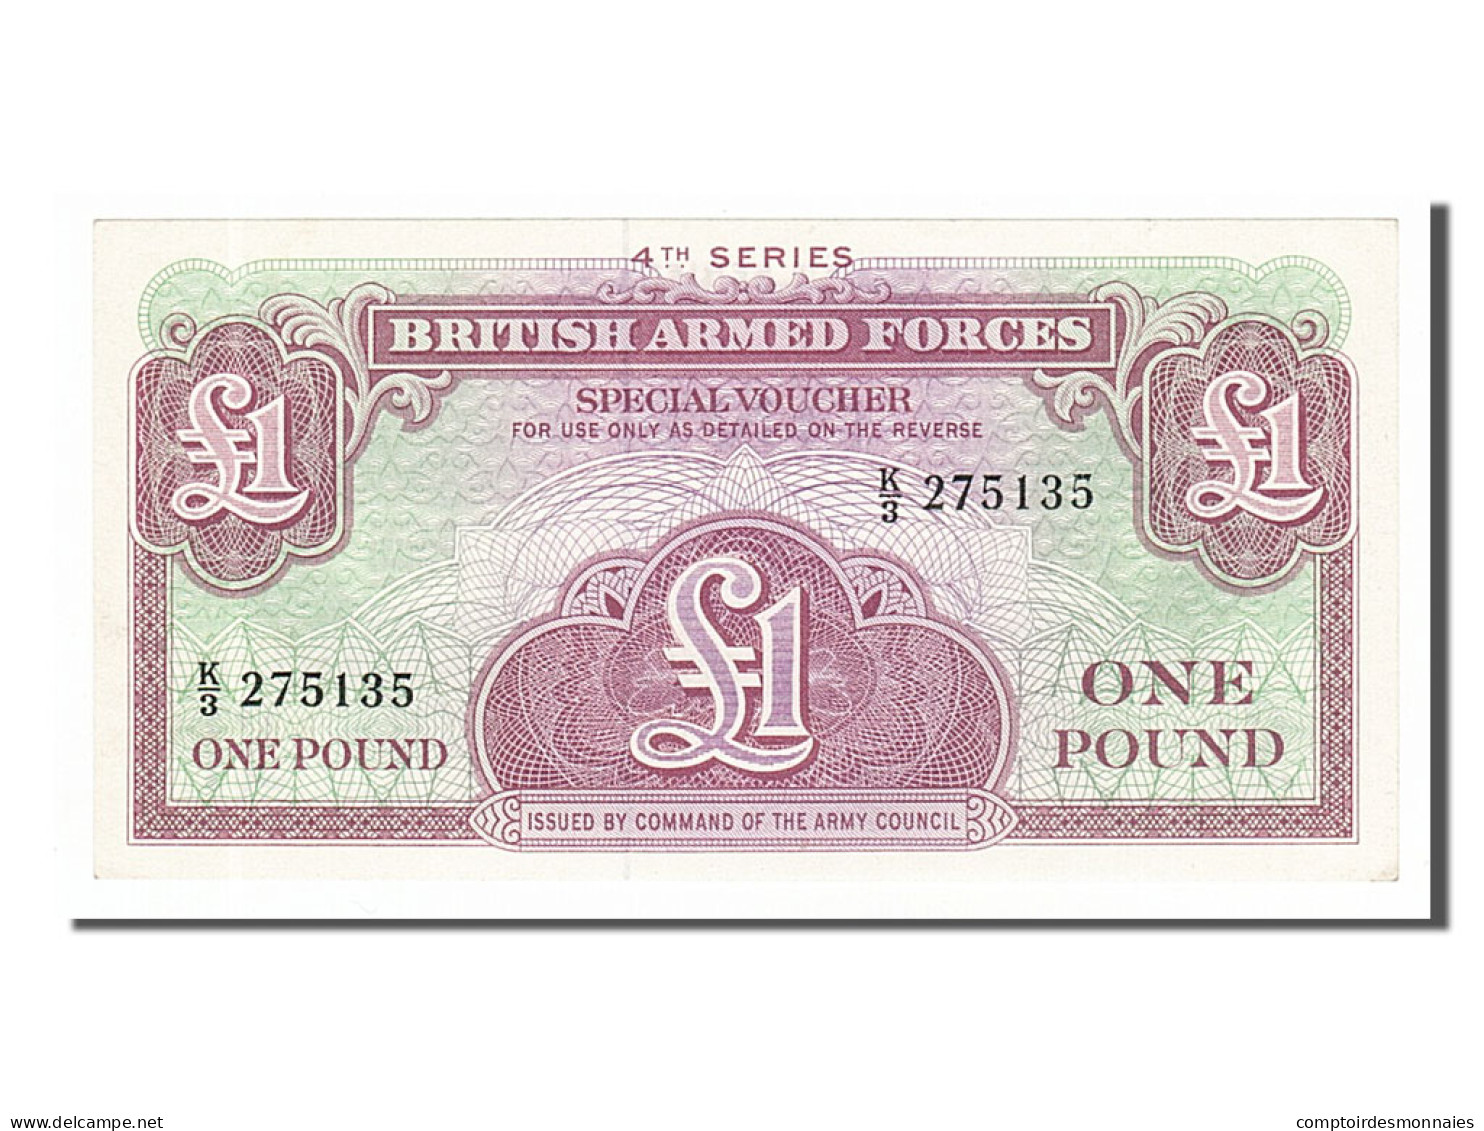 Billet, Grande-Bretagne, 1 Pound, 1962, NEUF - 1 Pound